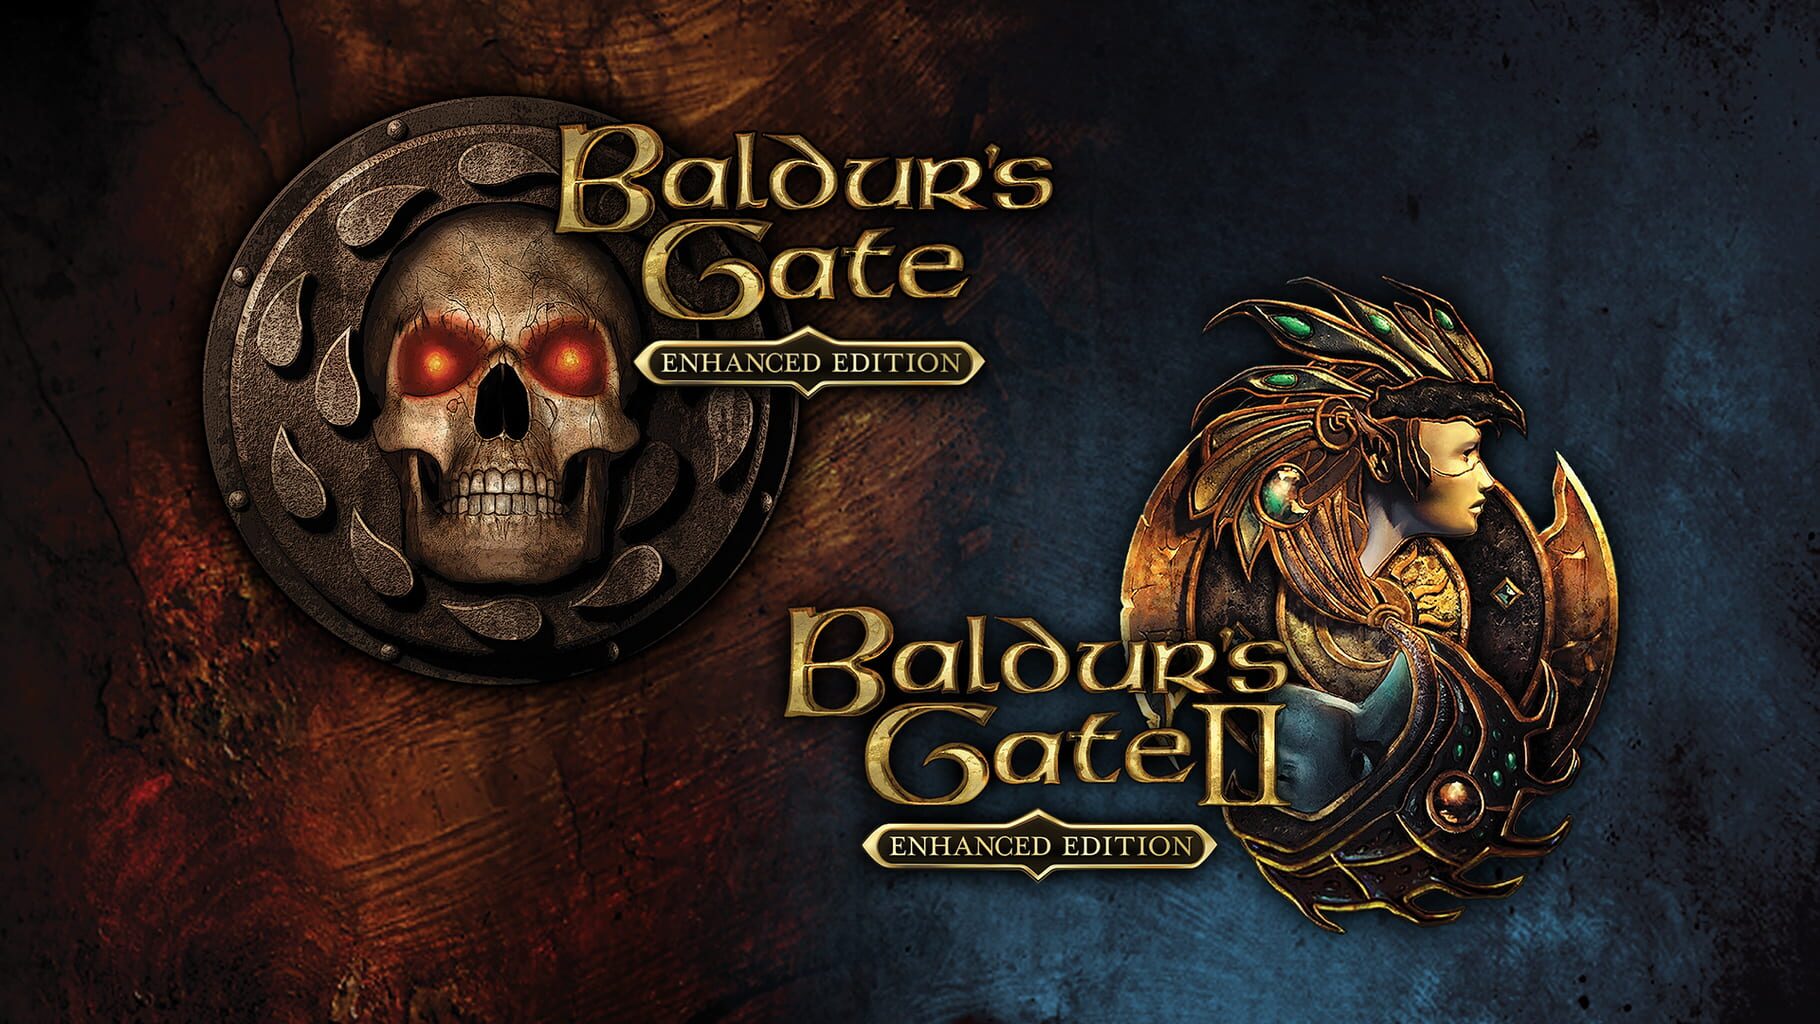 Baldur's Gate and Baldur's Gate II: Enhanced Editions artwork